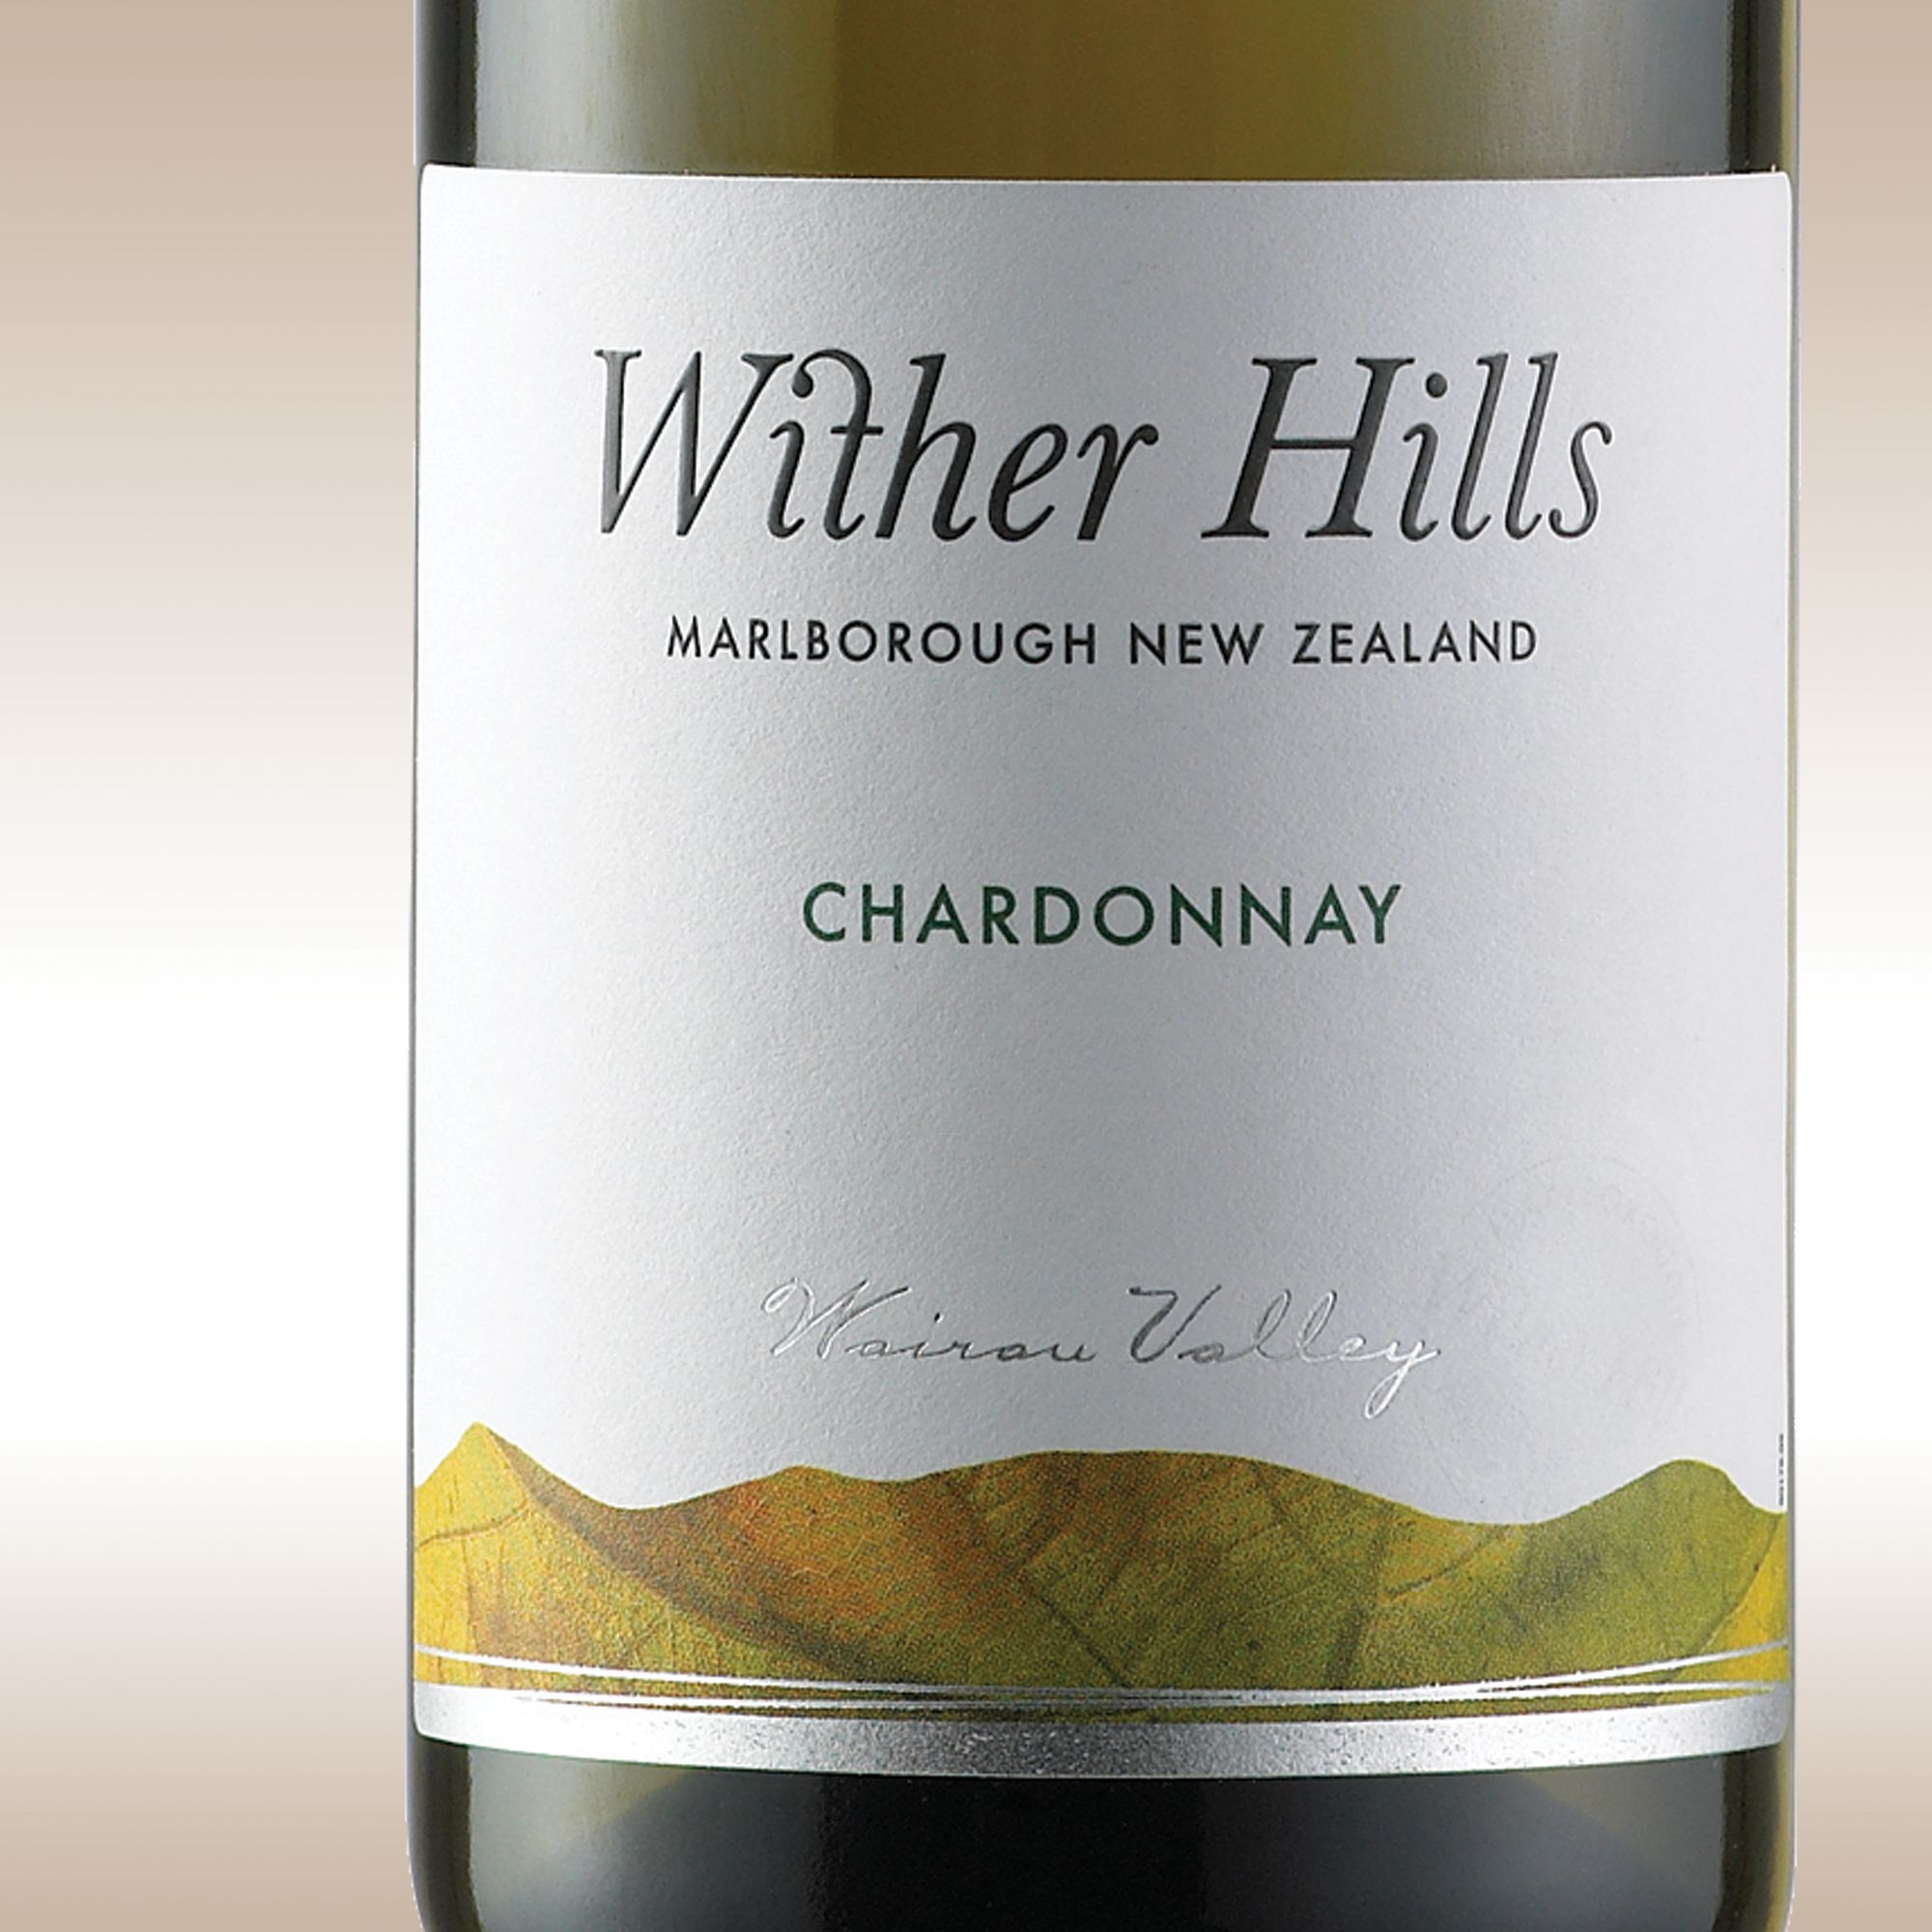 Wither Hills Chardonnay 2005/06 Marlborough, New Zealand